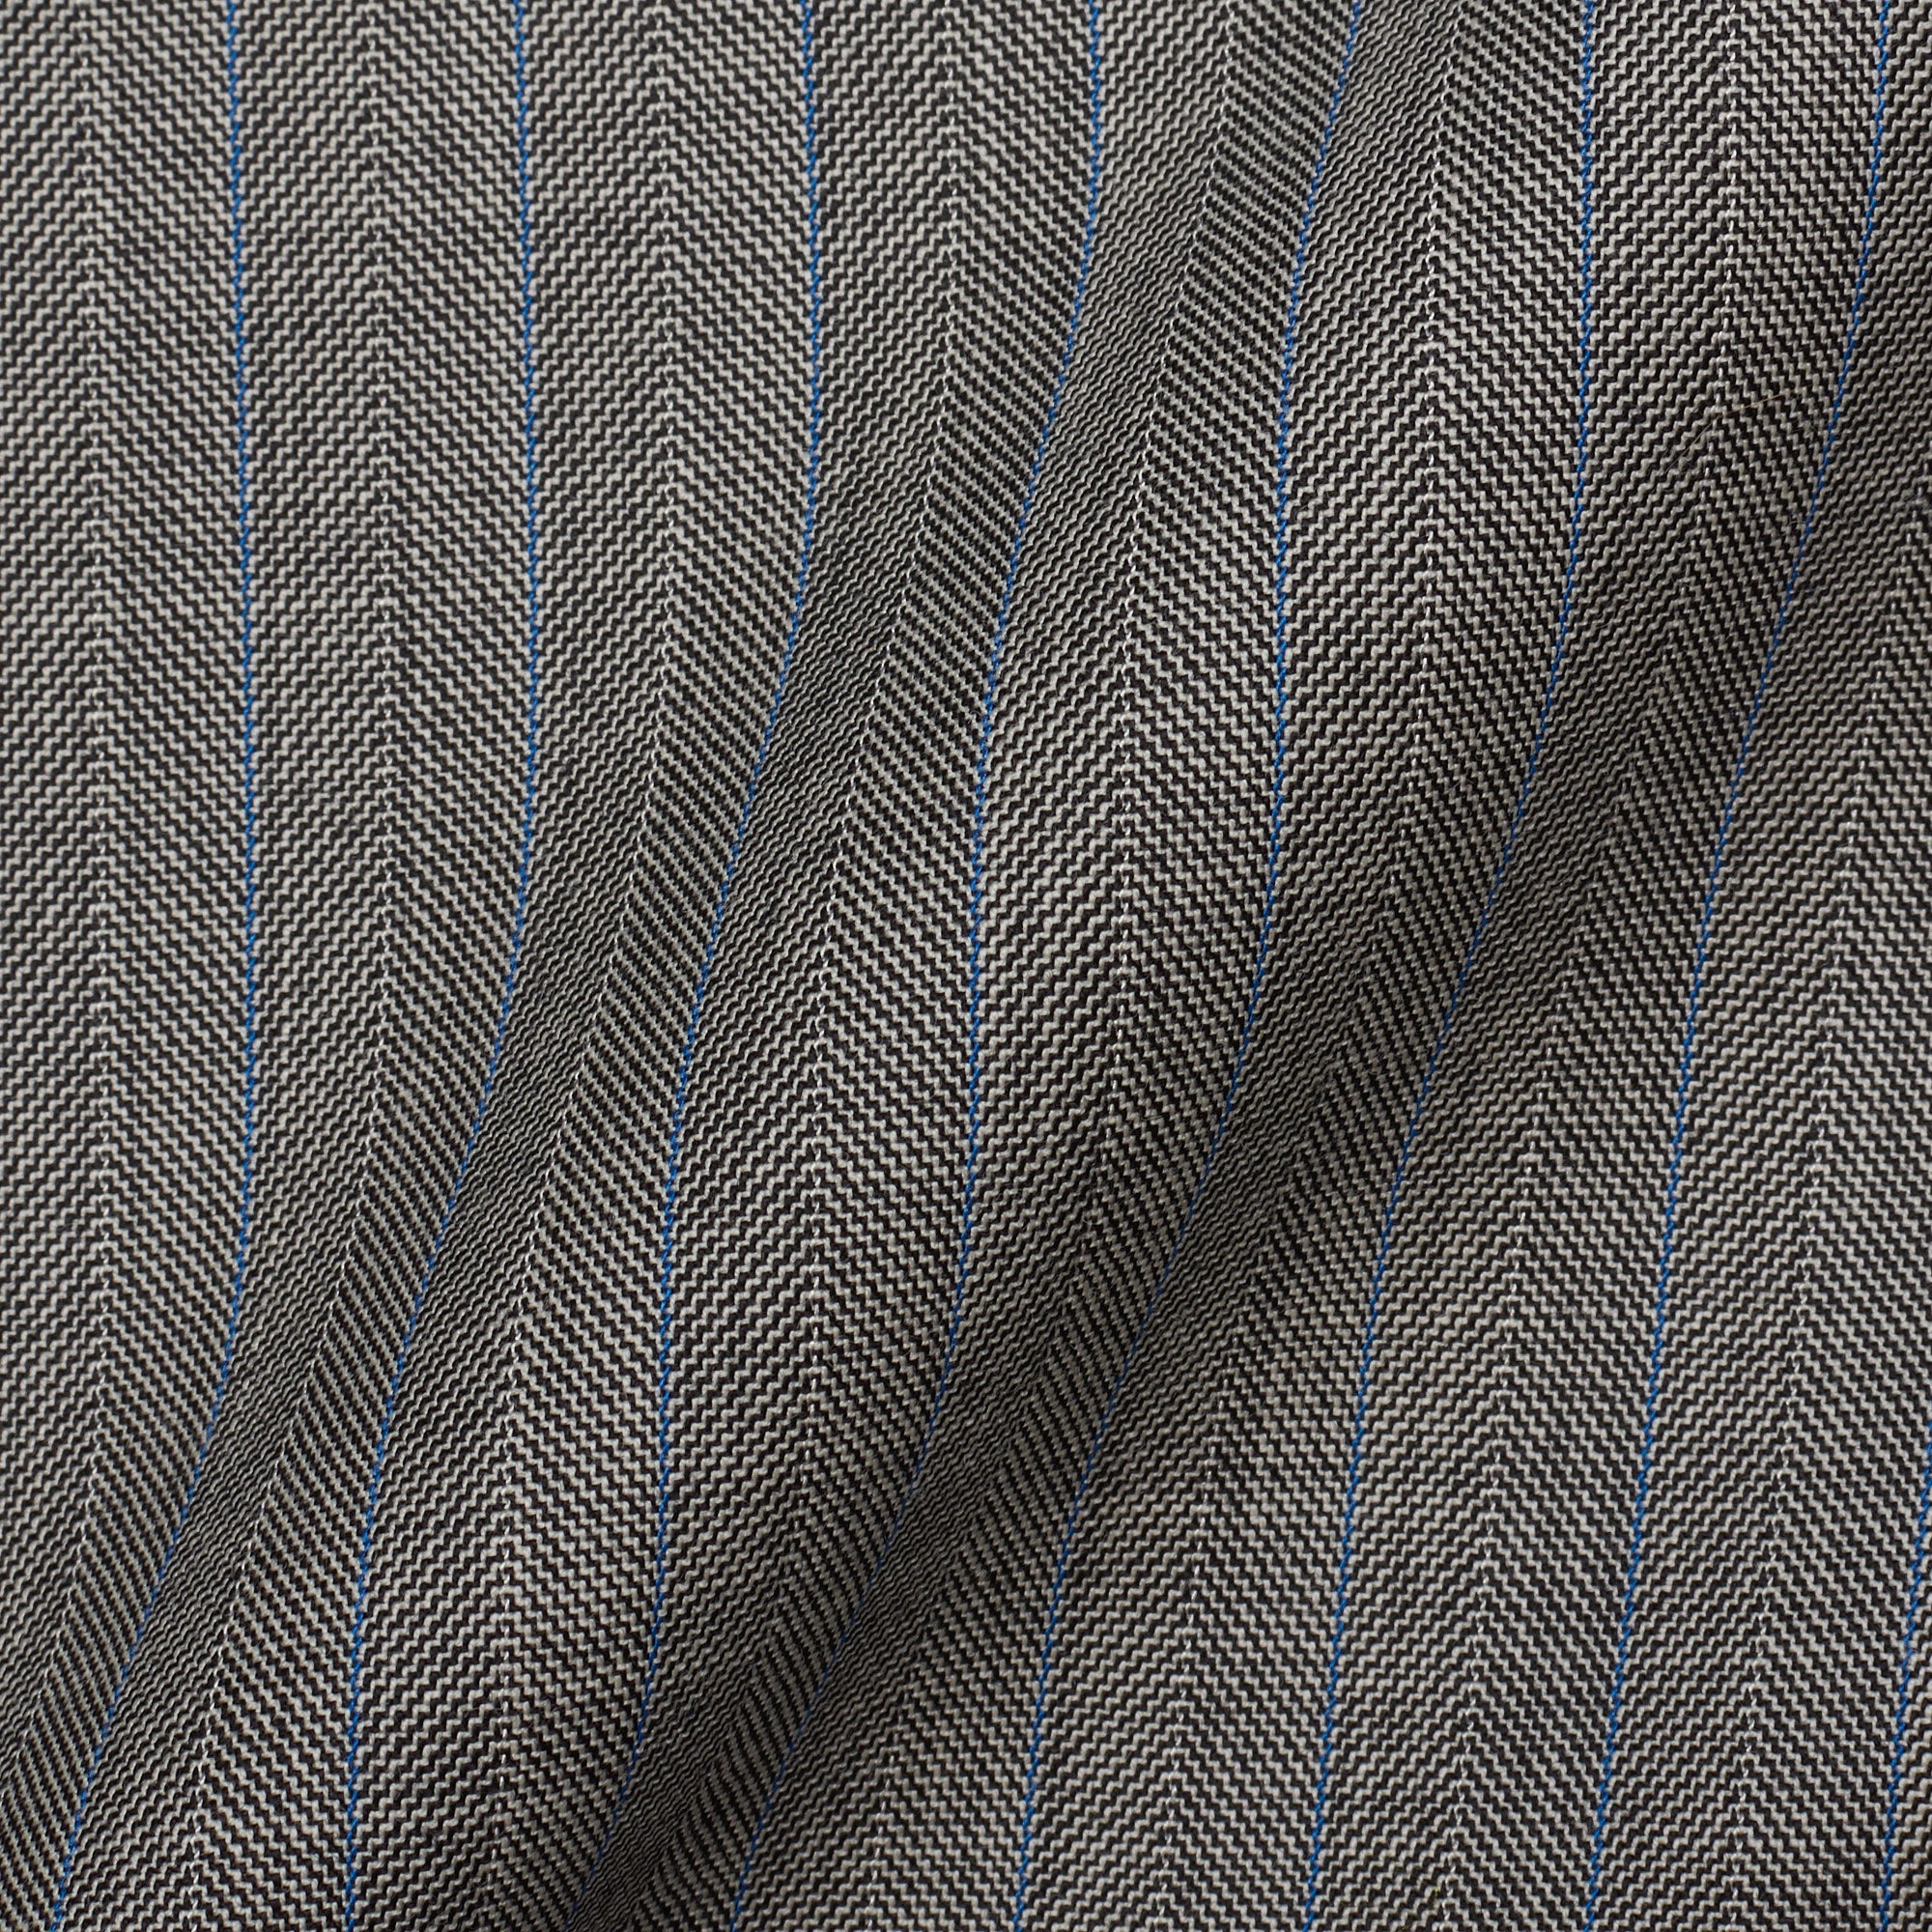 CESARE ATTOLINI Gray Herringbone Striped Wool Super 140's Suit EU 52 US 42 CESARE ATTOLINI